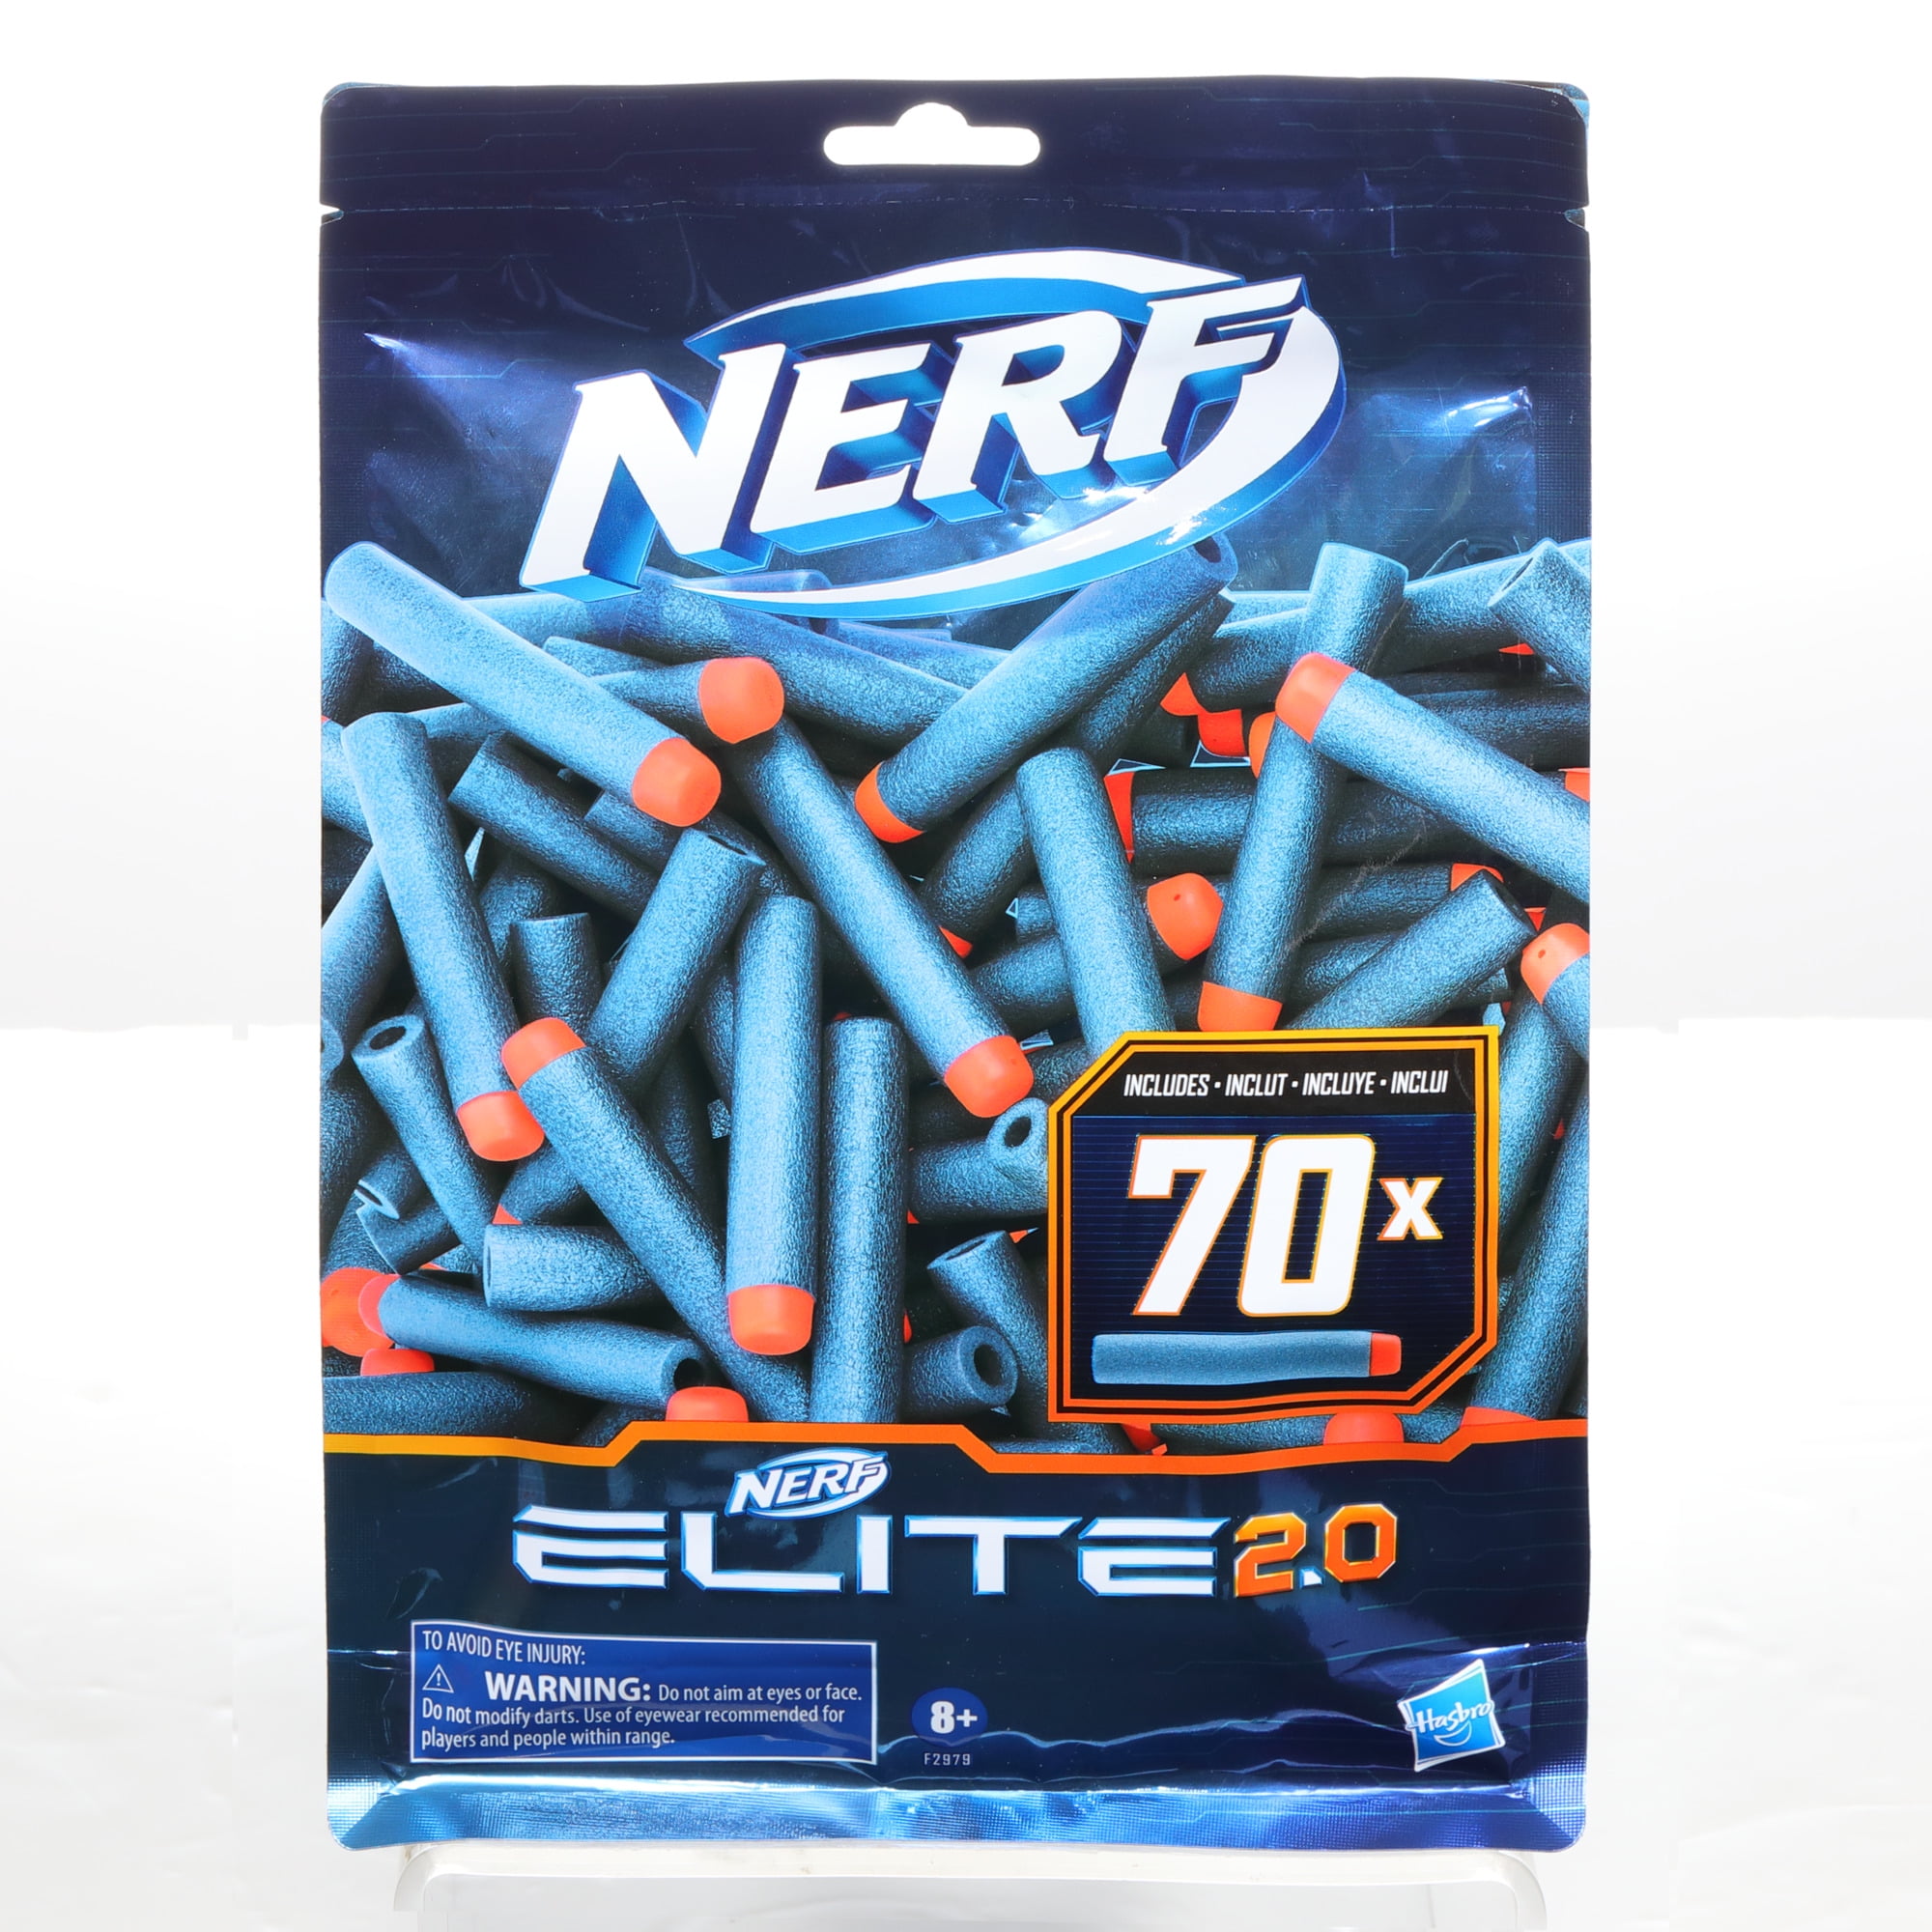 200pcs Bullet Darts For NERF Kids Toy Gun N-Strike Round Head Blasters #S Blue 